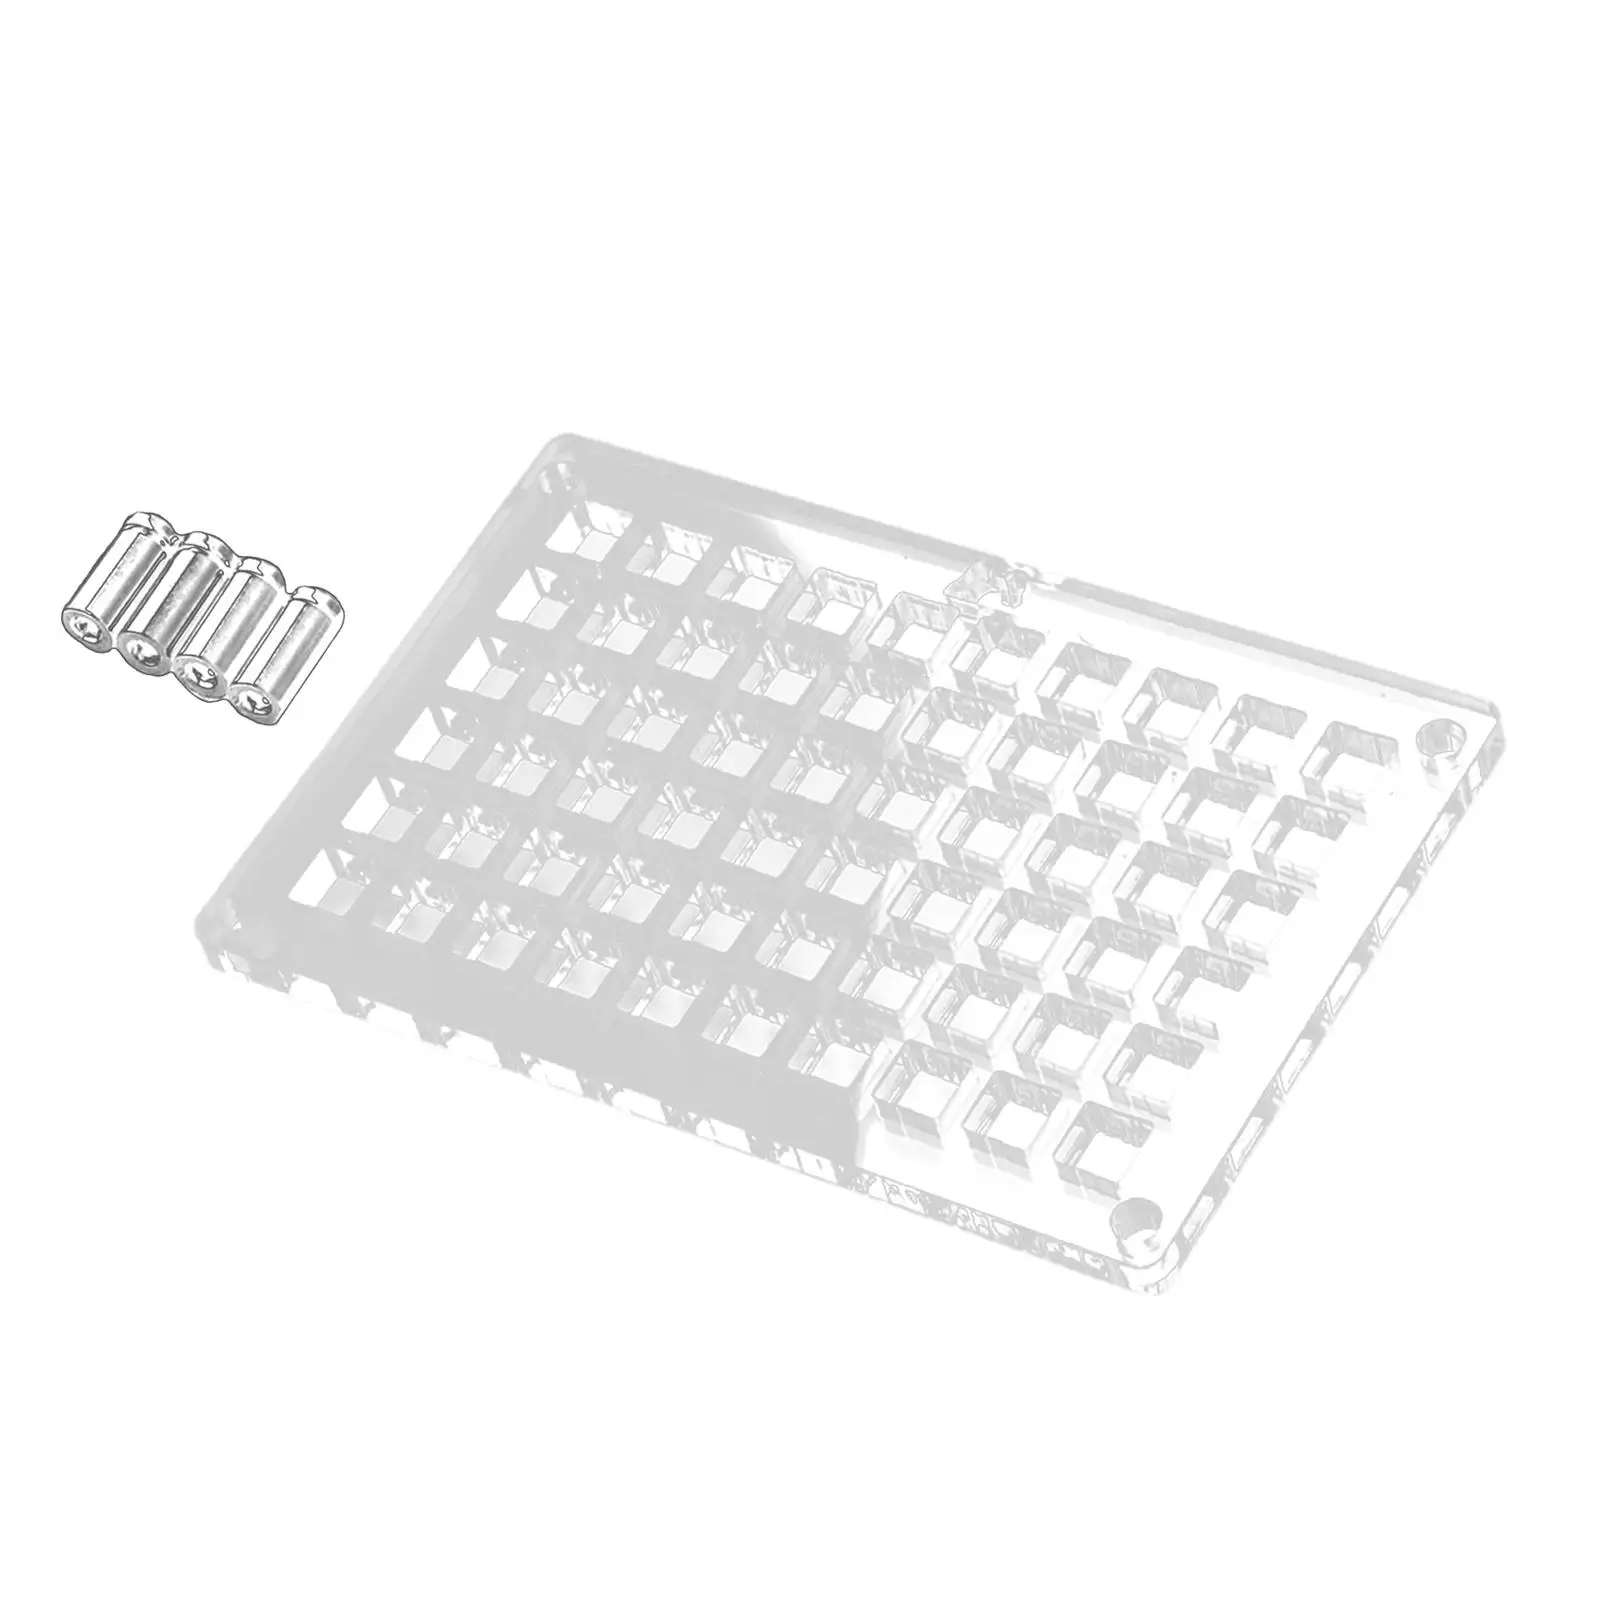 Acrylic Keyboard Switch Tester Premium Base Mechanical Keyboard DIY Durable Electronics Switch Opener Lube Station for Box